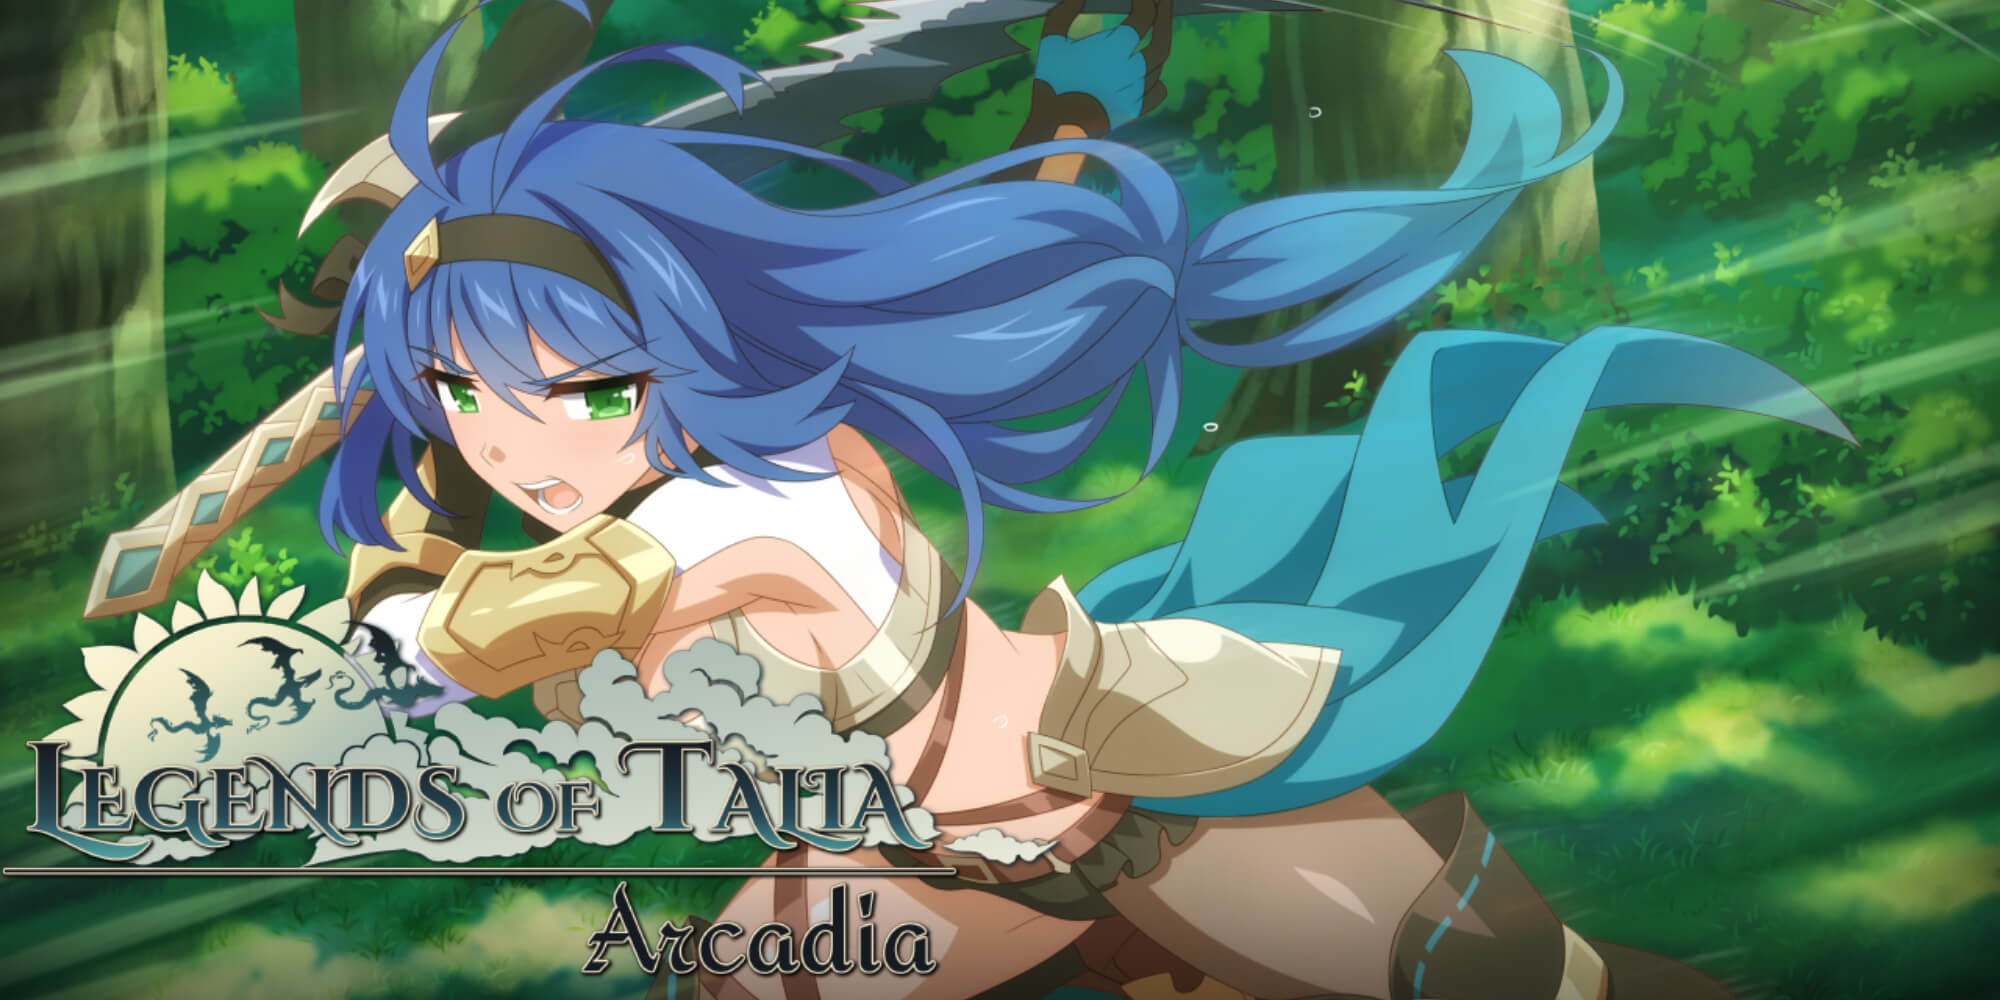 [Review] Legends of Talia: Arcadia